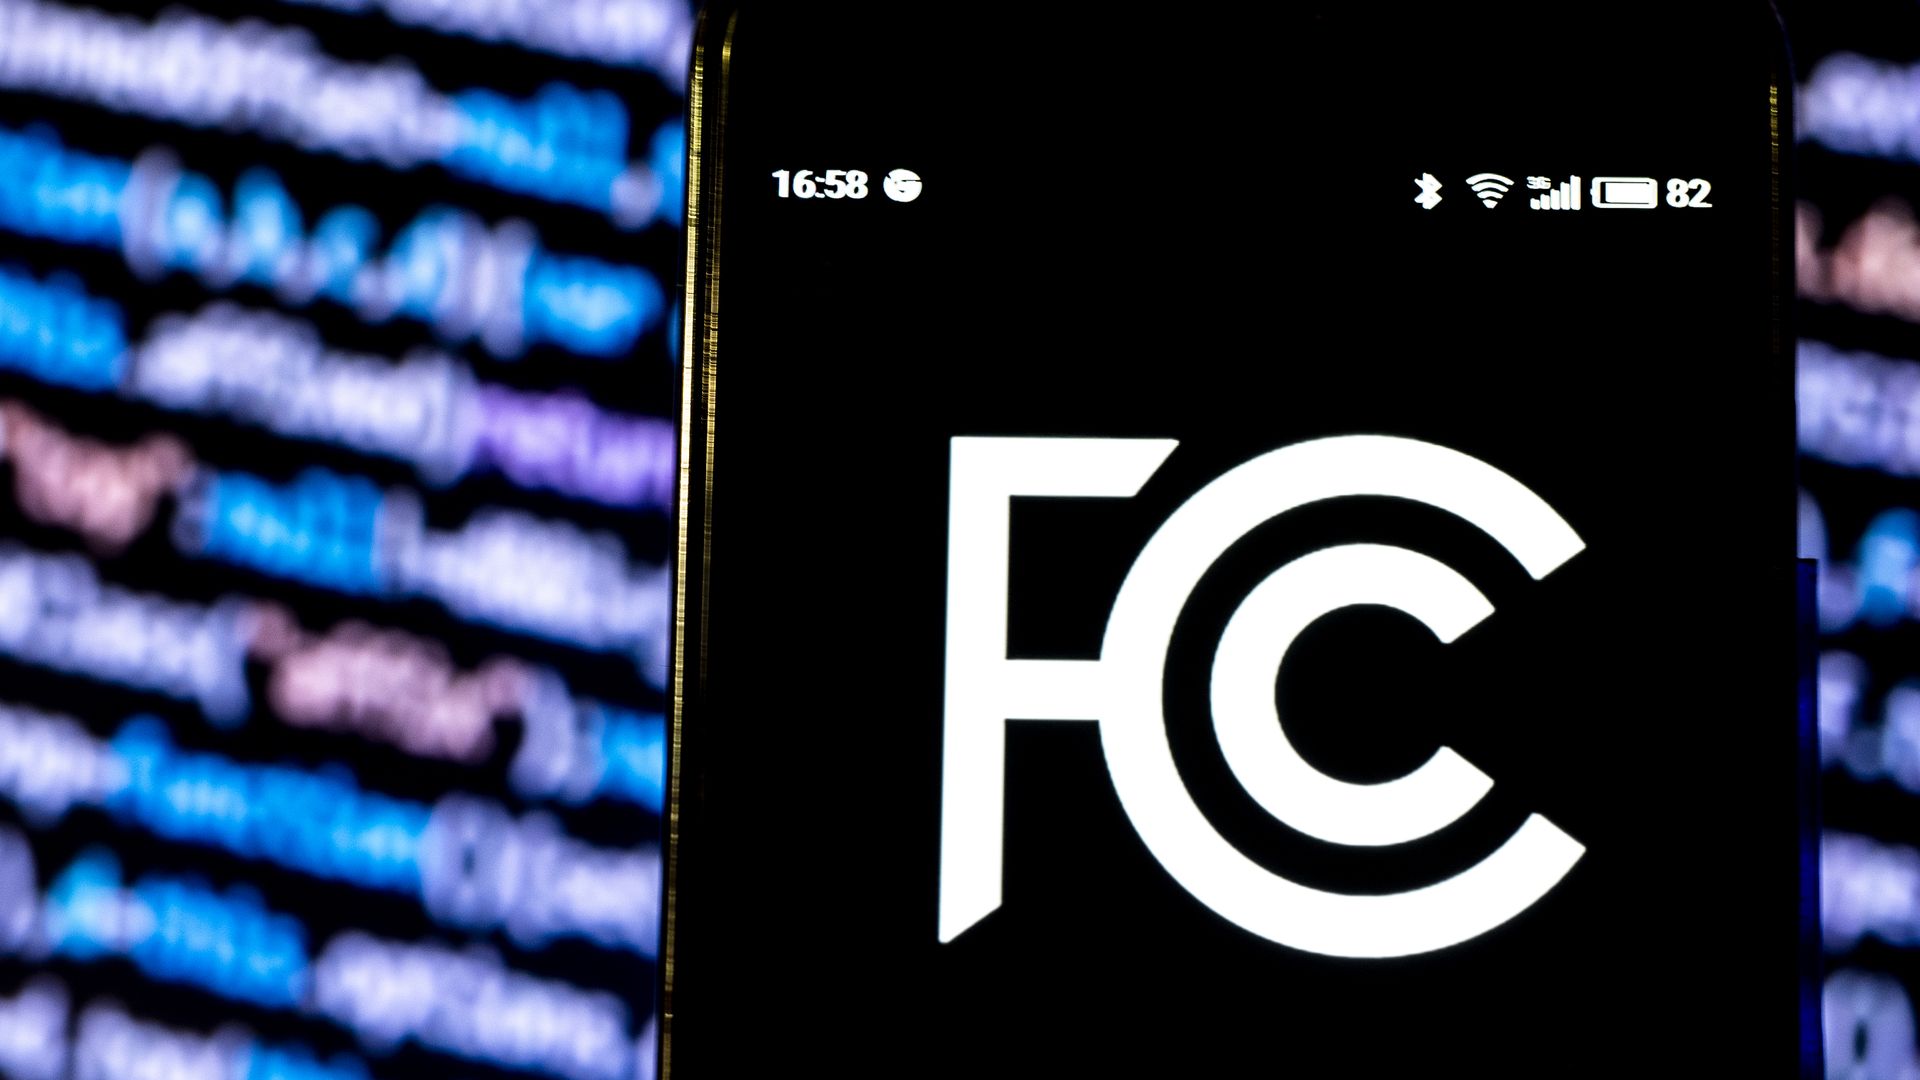 FCC logo displayed on smartphone